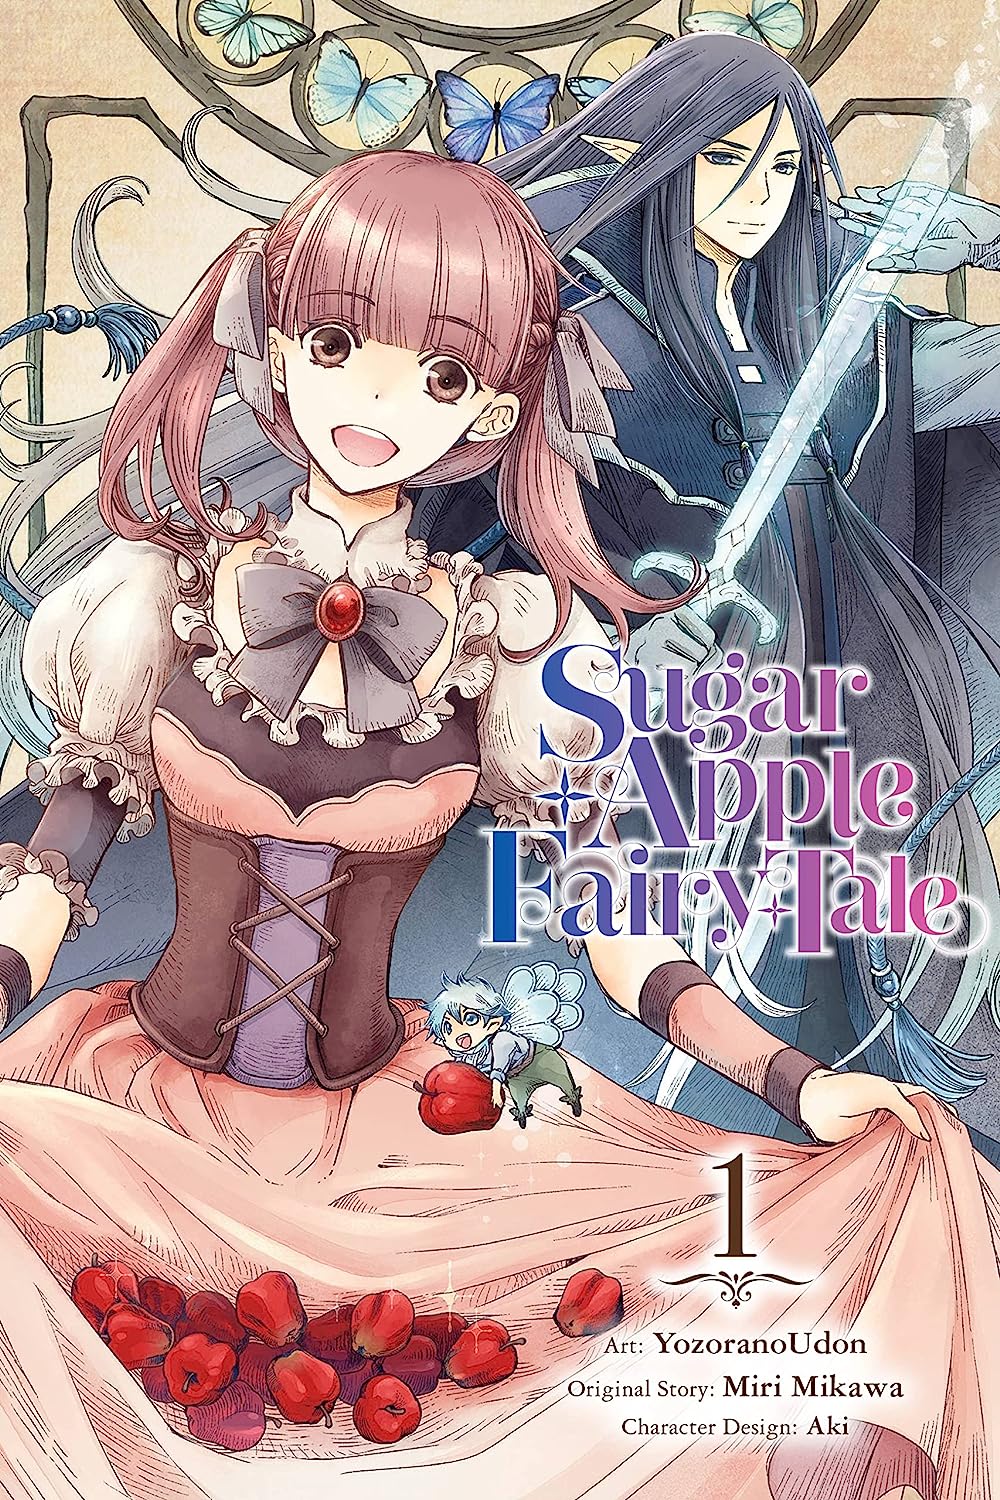 Buy tiny snow fairy sugar - 27763 | Premium Anime Poster | Animeprintz.com